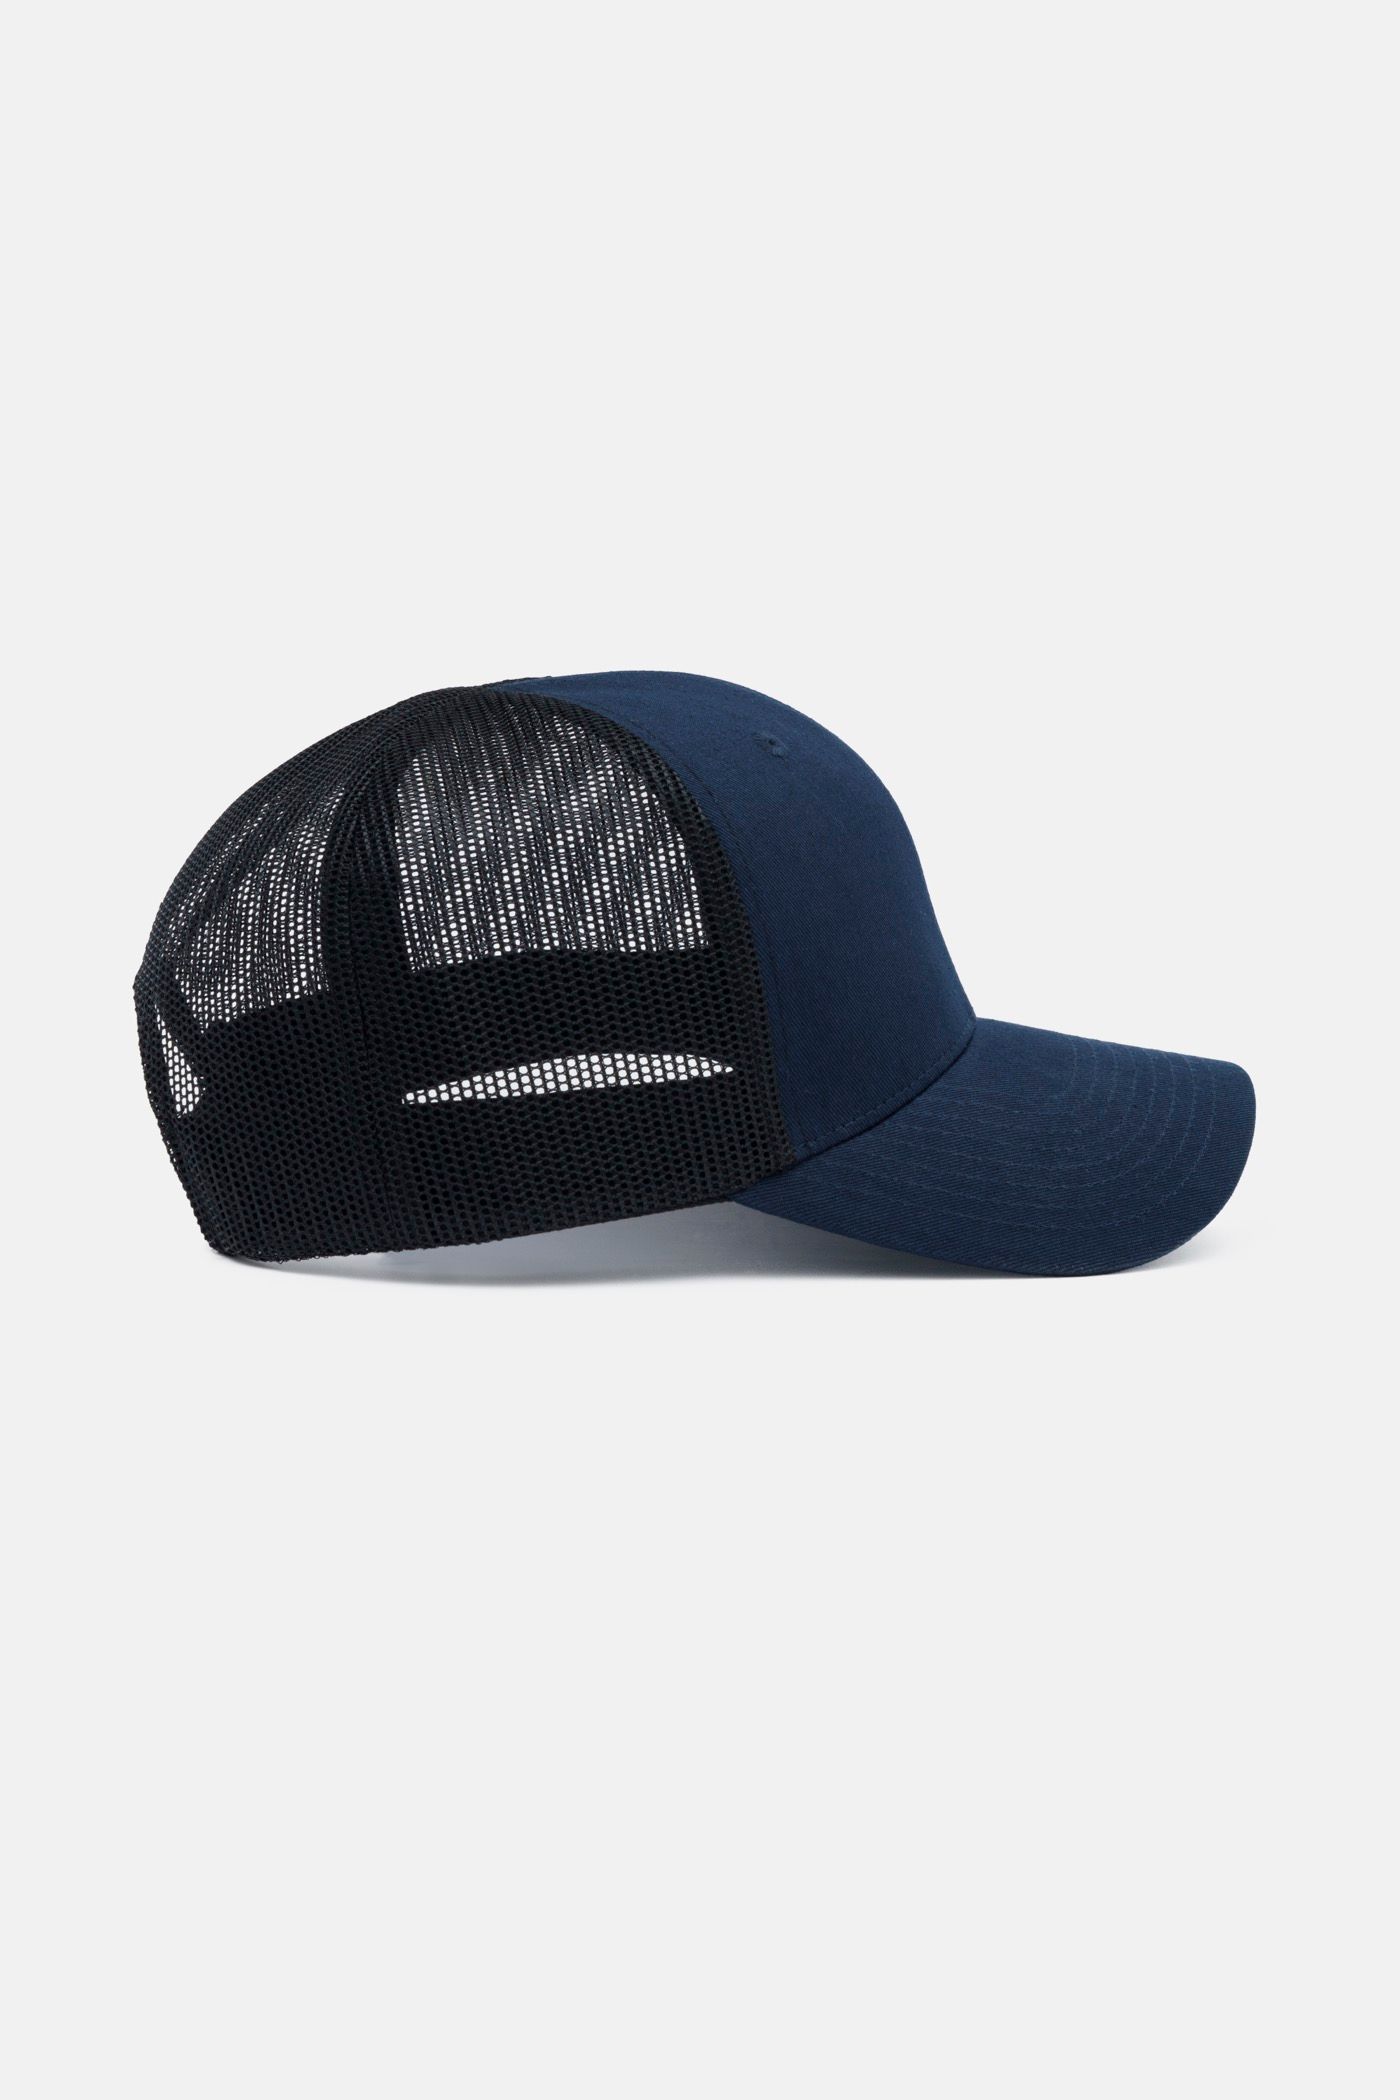 Proudly | Mũ/Nón lưới trai Baseball Cap  xanh-navy 3